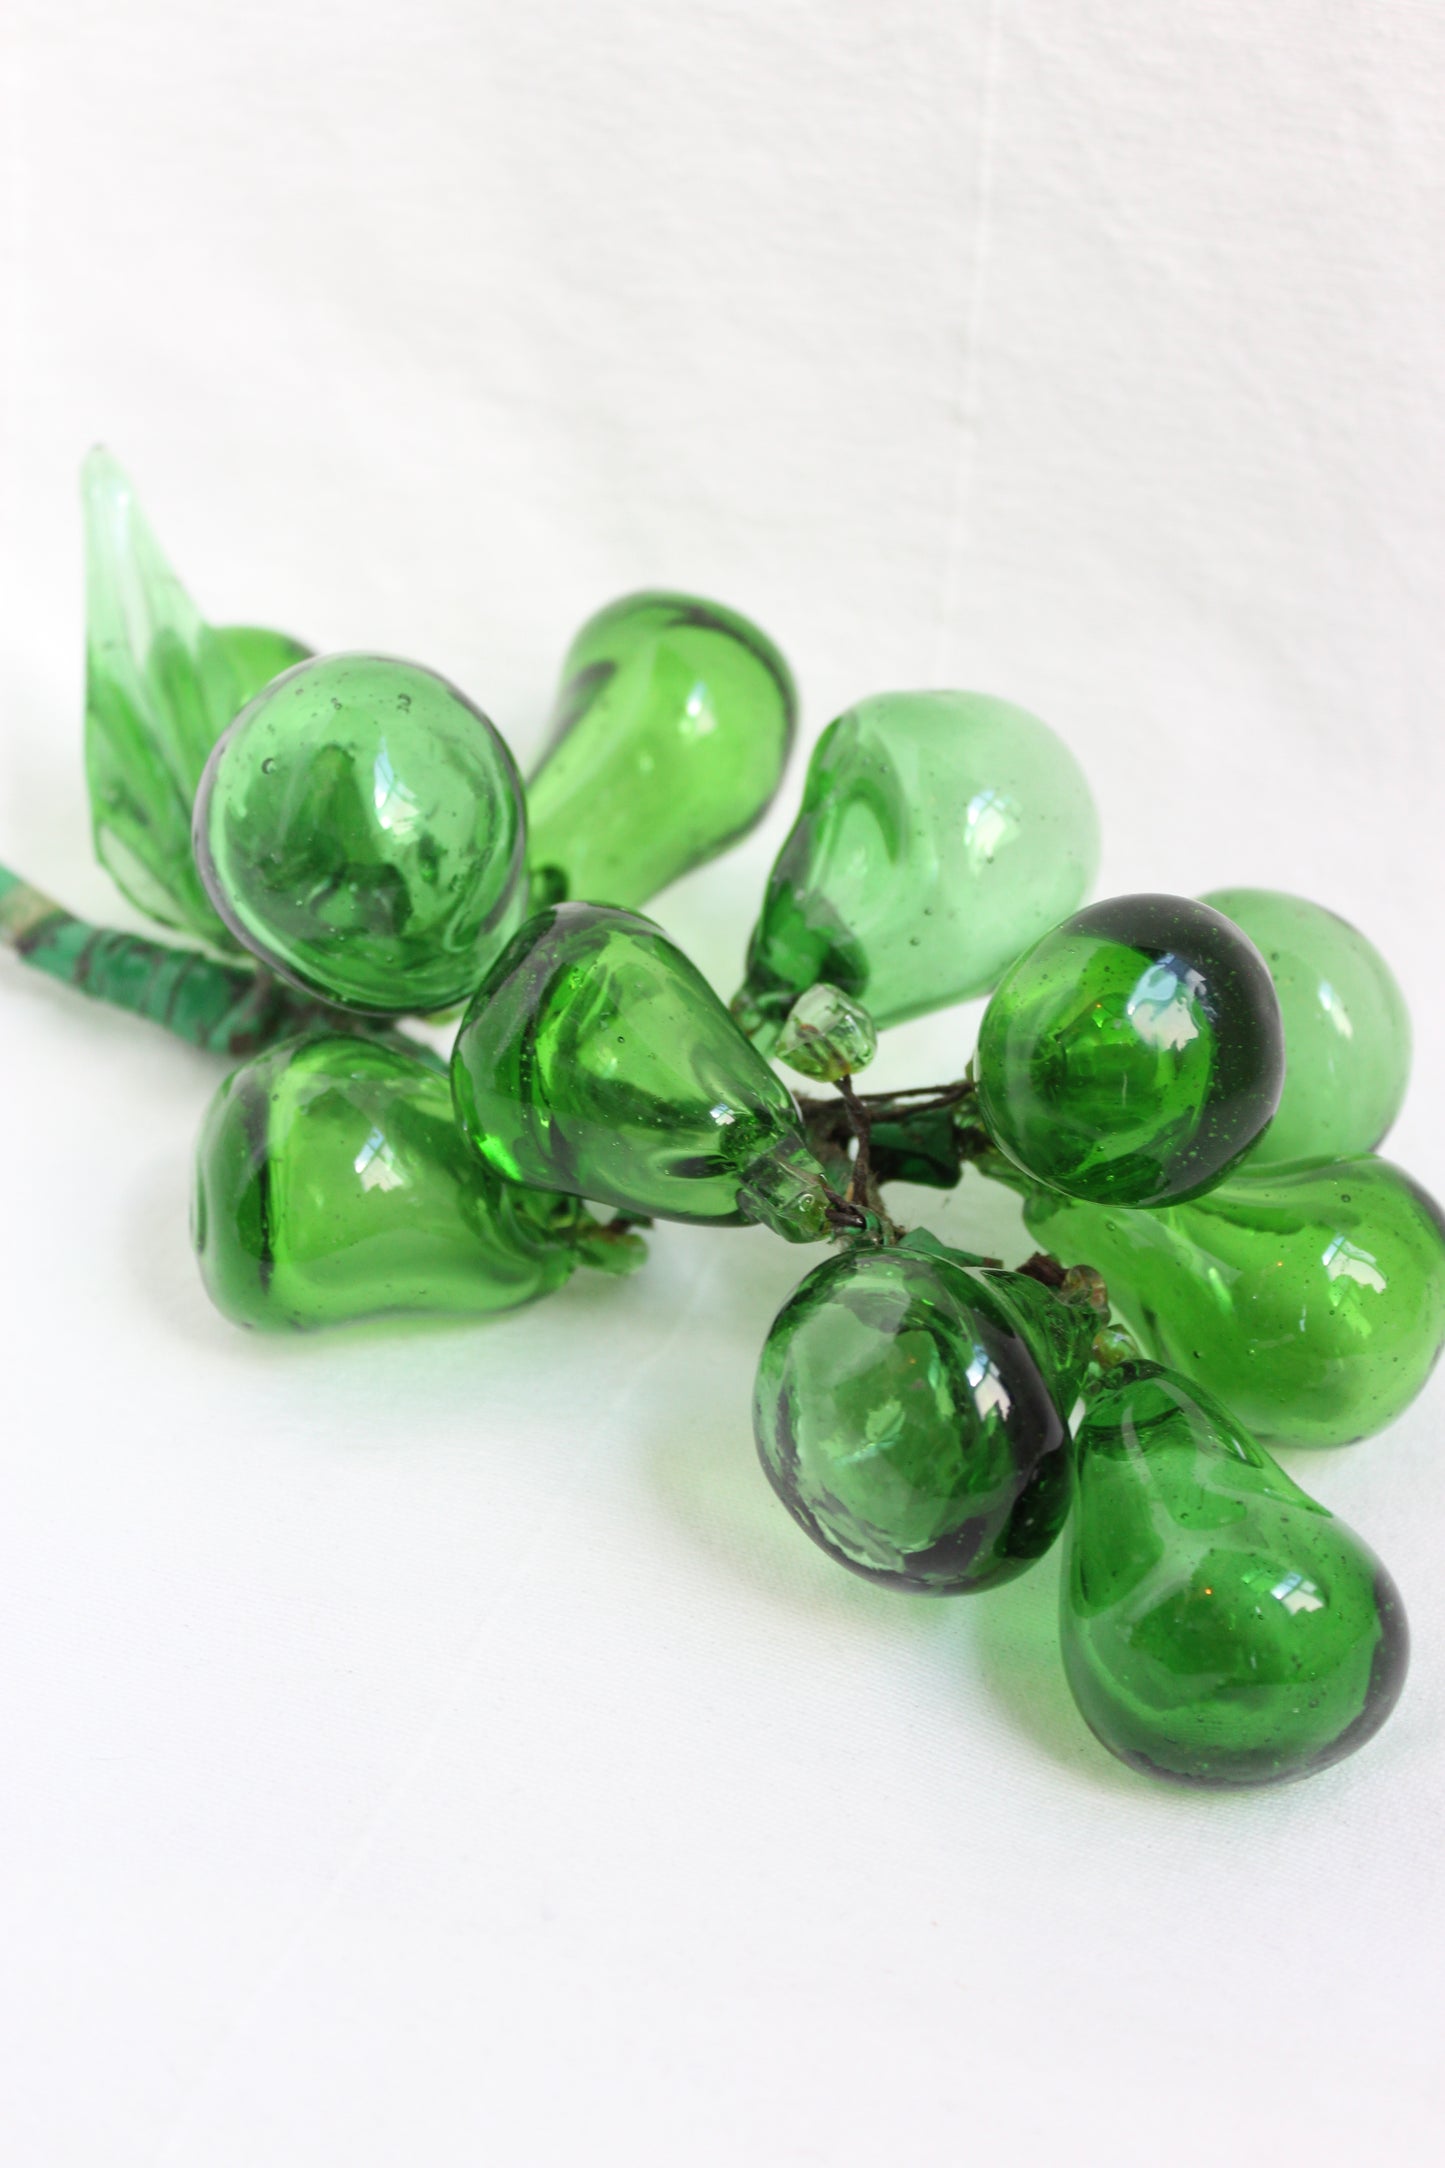 Green glass decorative grapes